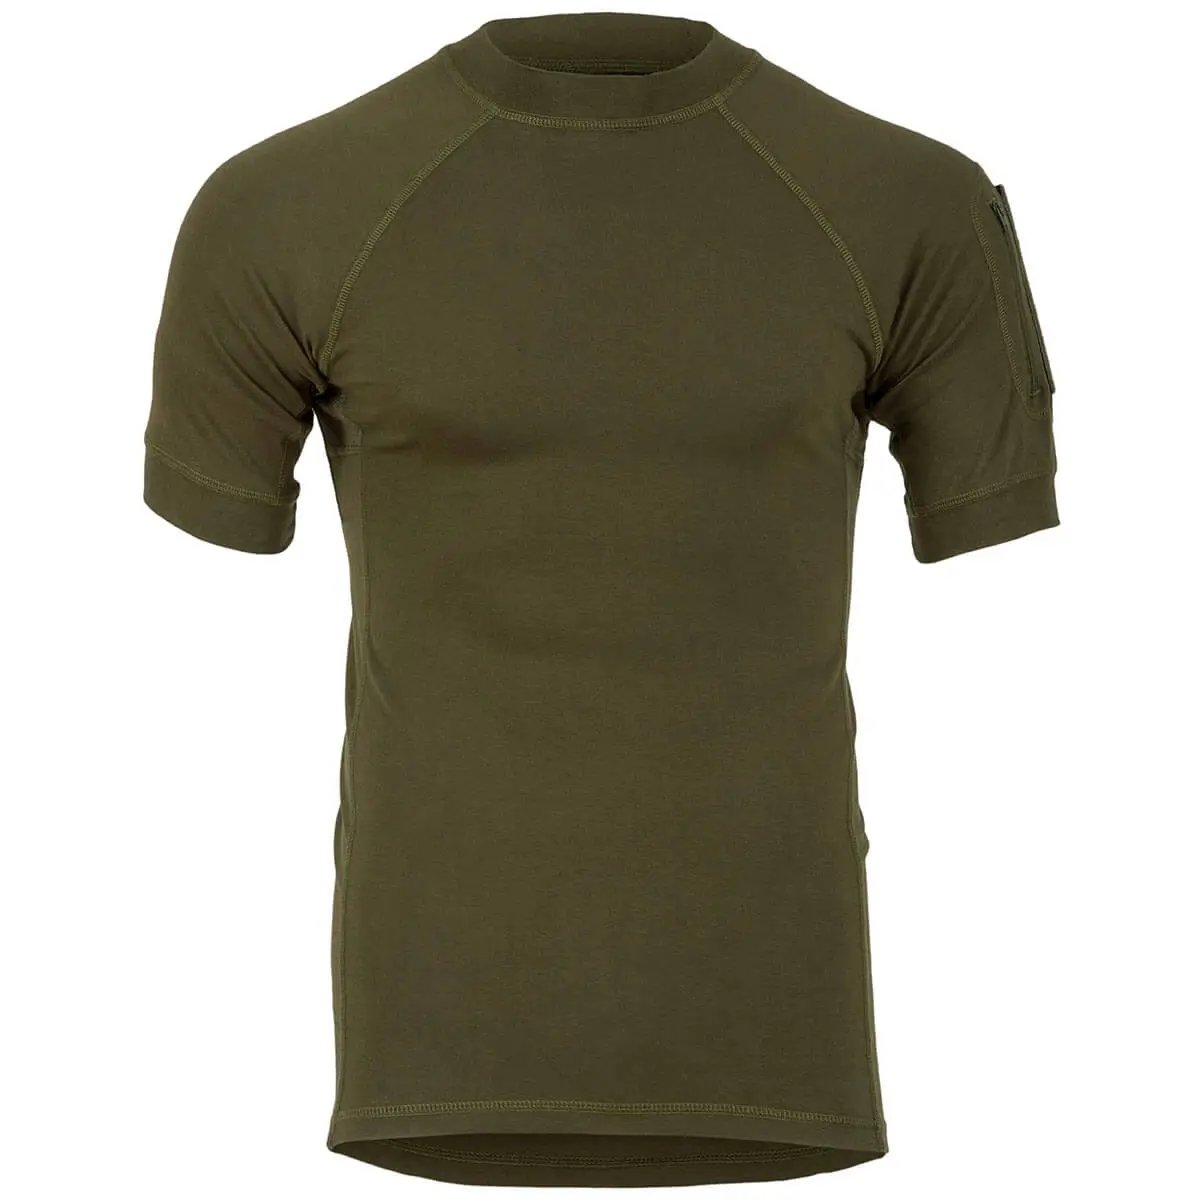 Highlander Combat T-Shirt - John Bull Clothing